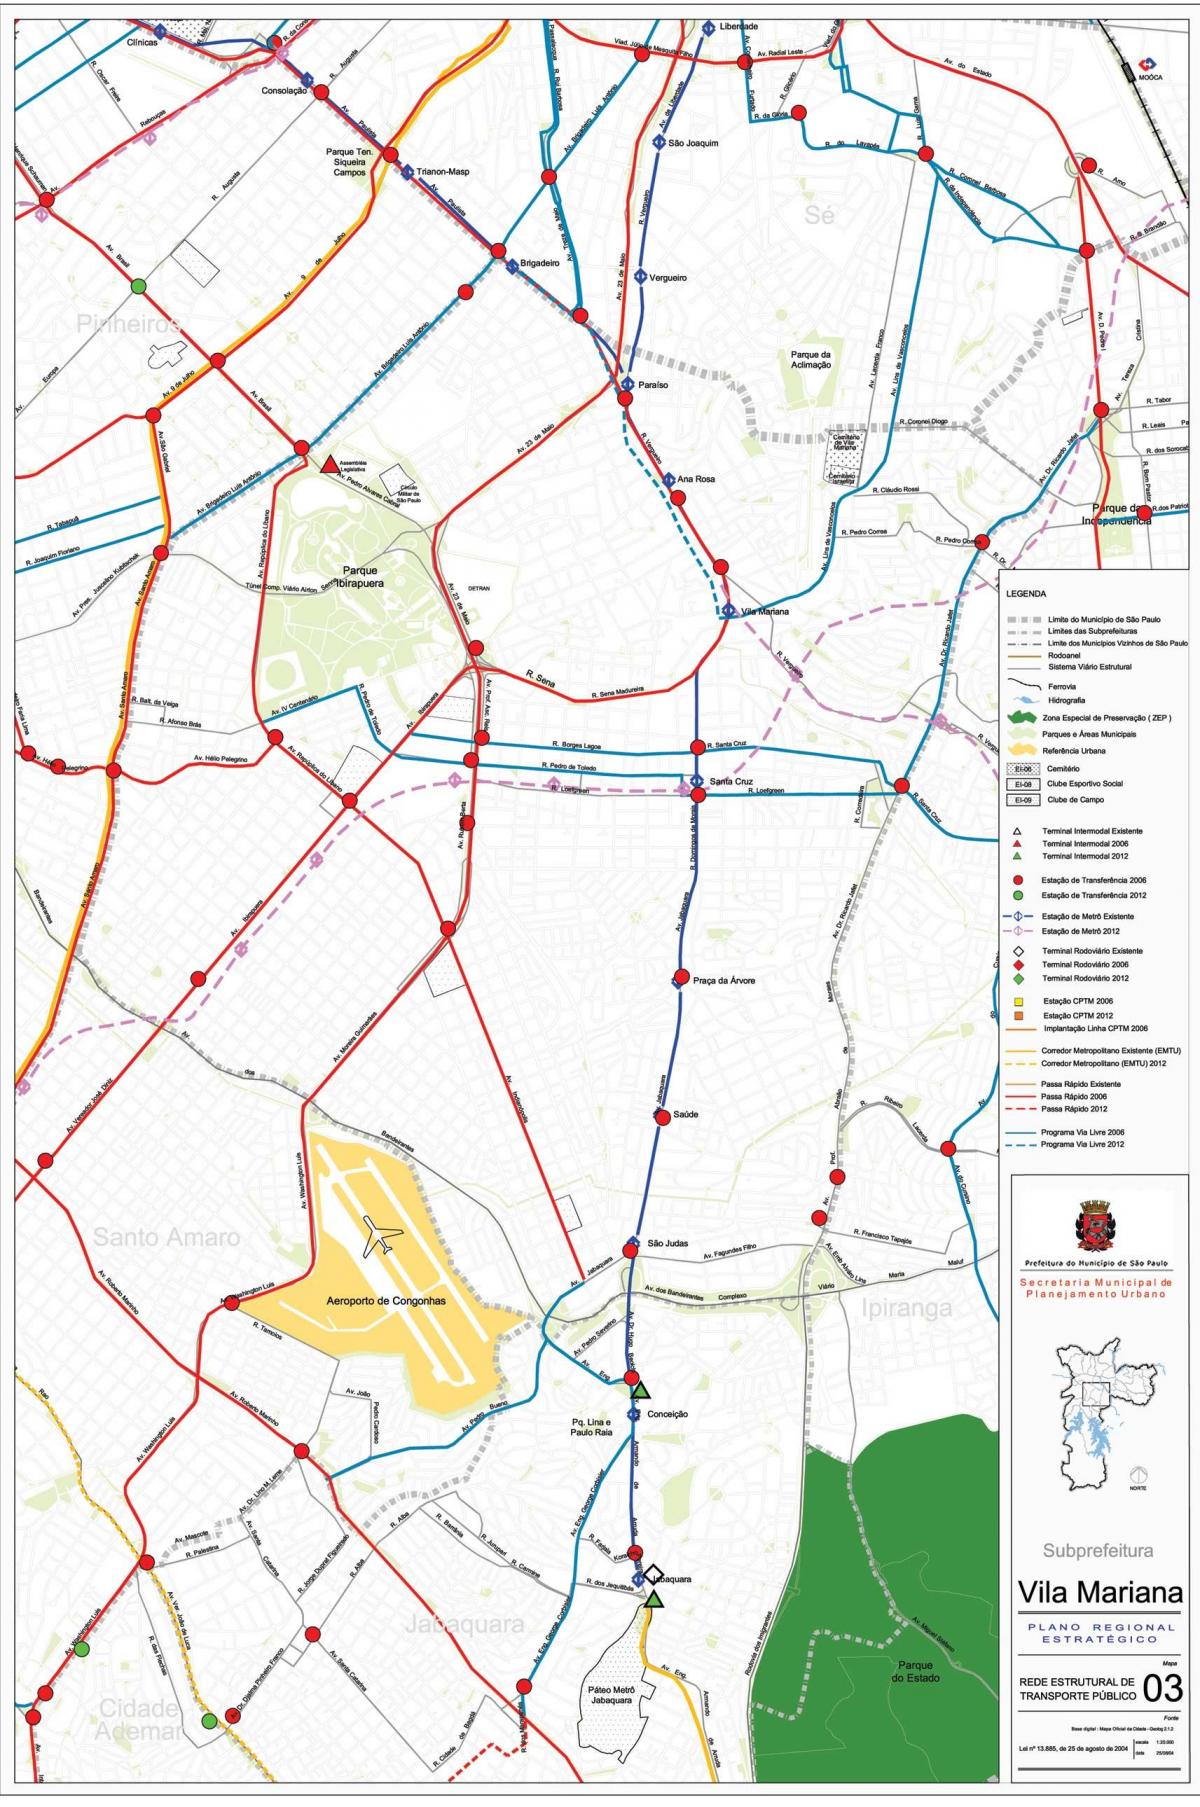 Mapa de Vila Mariana Galicia - Público de transportes